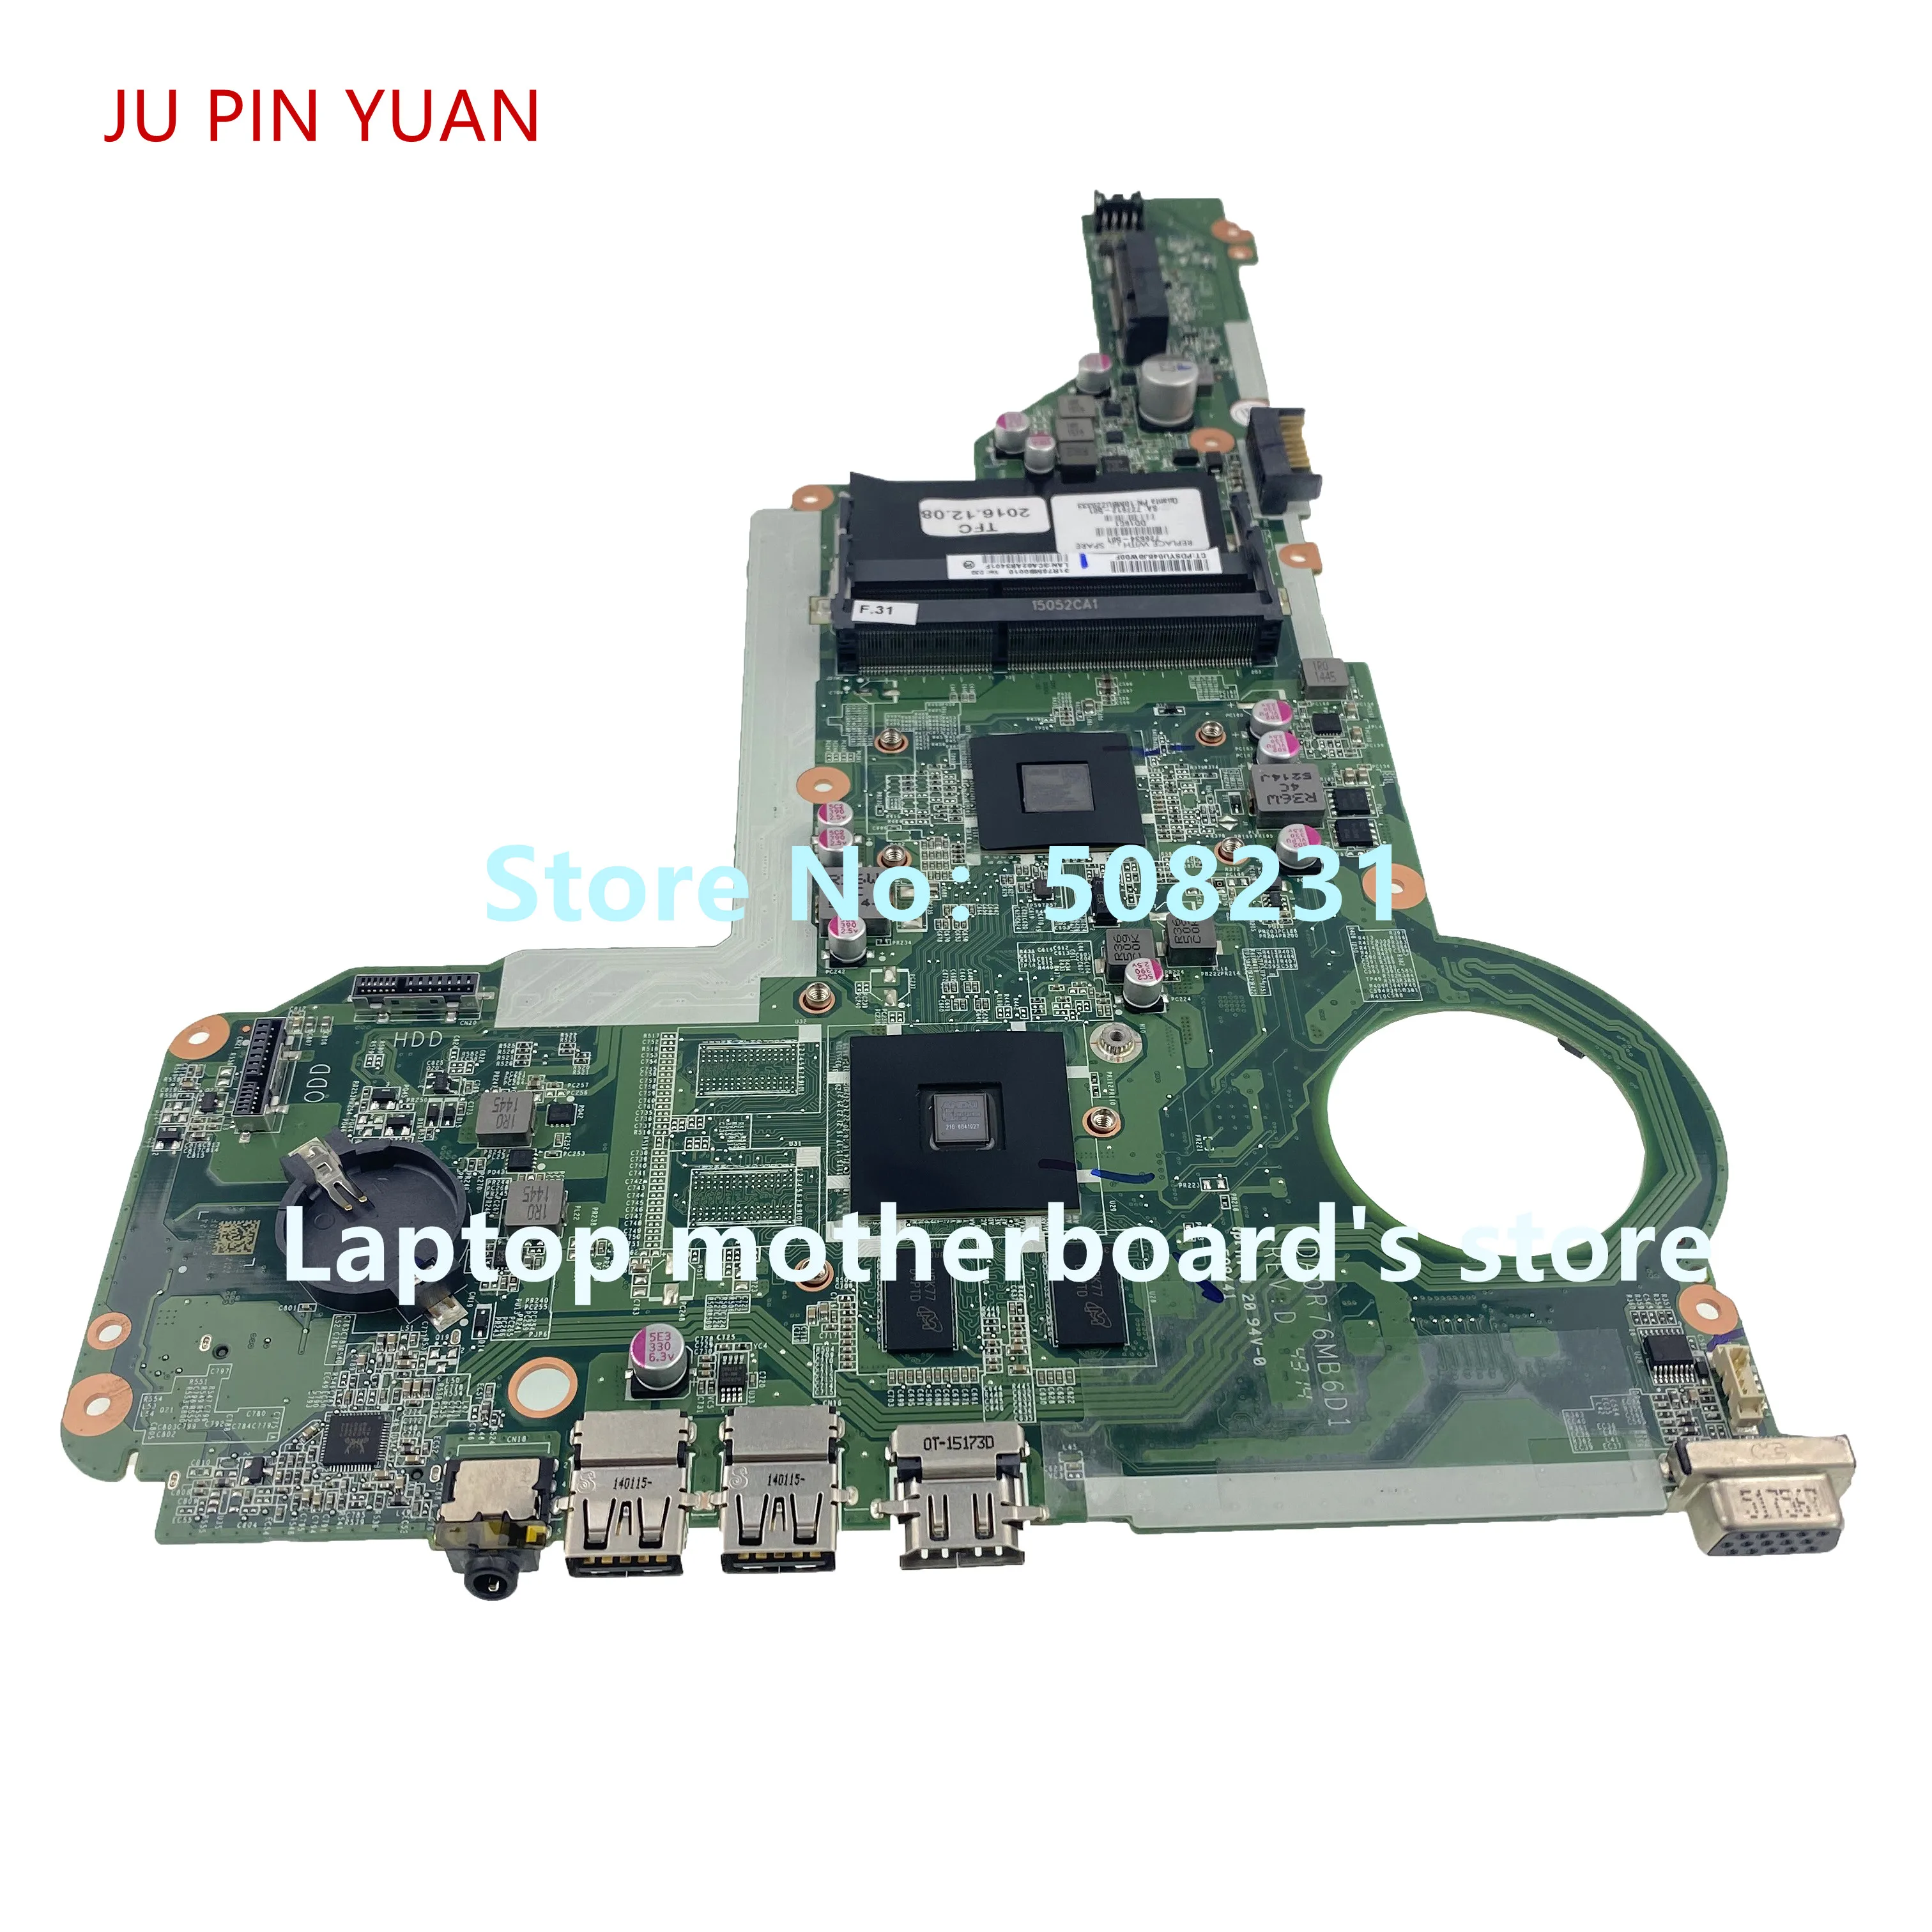 90% OFF  JU PIN YUAN For HP PAVILION 17Z-E000 17-E 17Z 15-E Laptop motherboard 726634-001 726634-501 100% fu